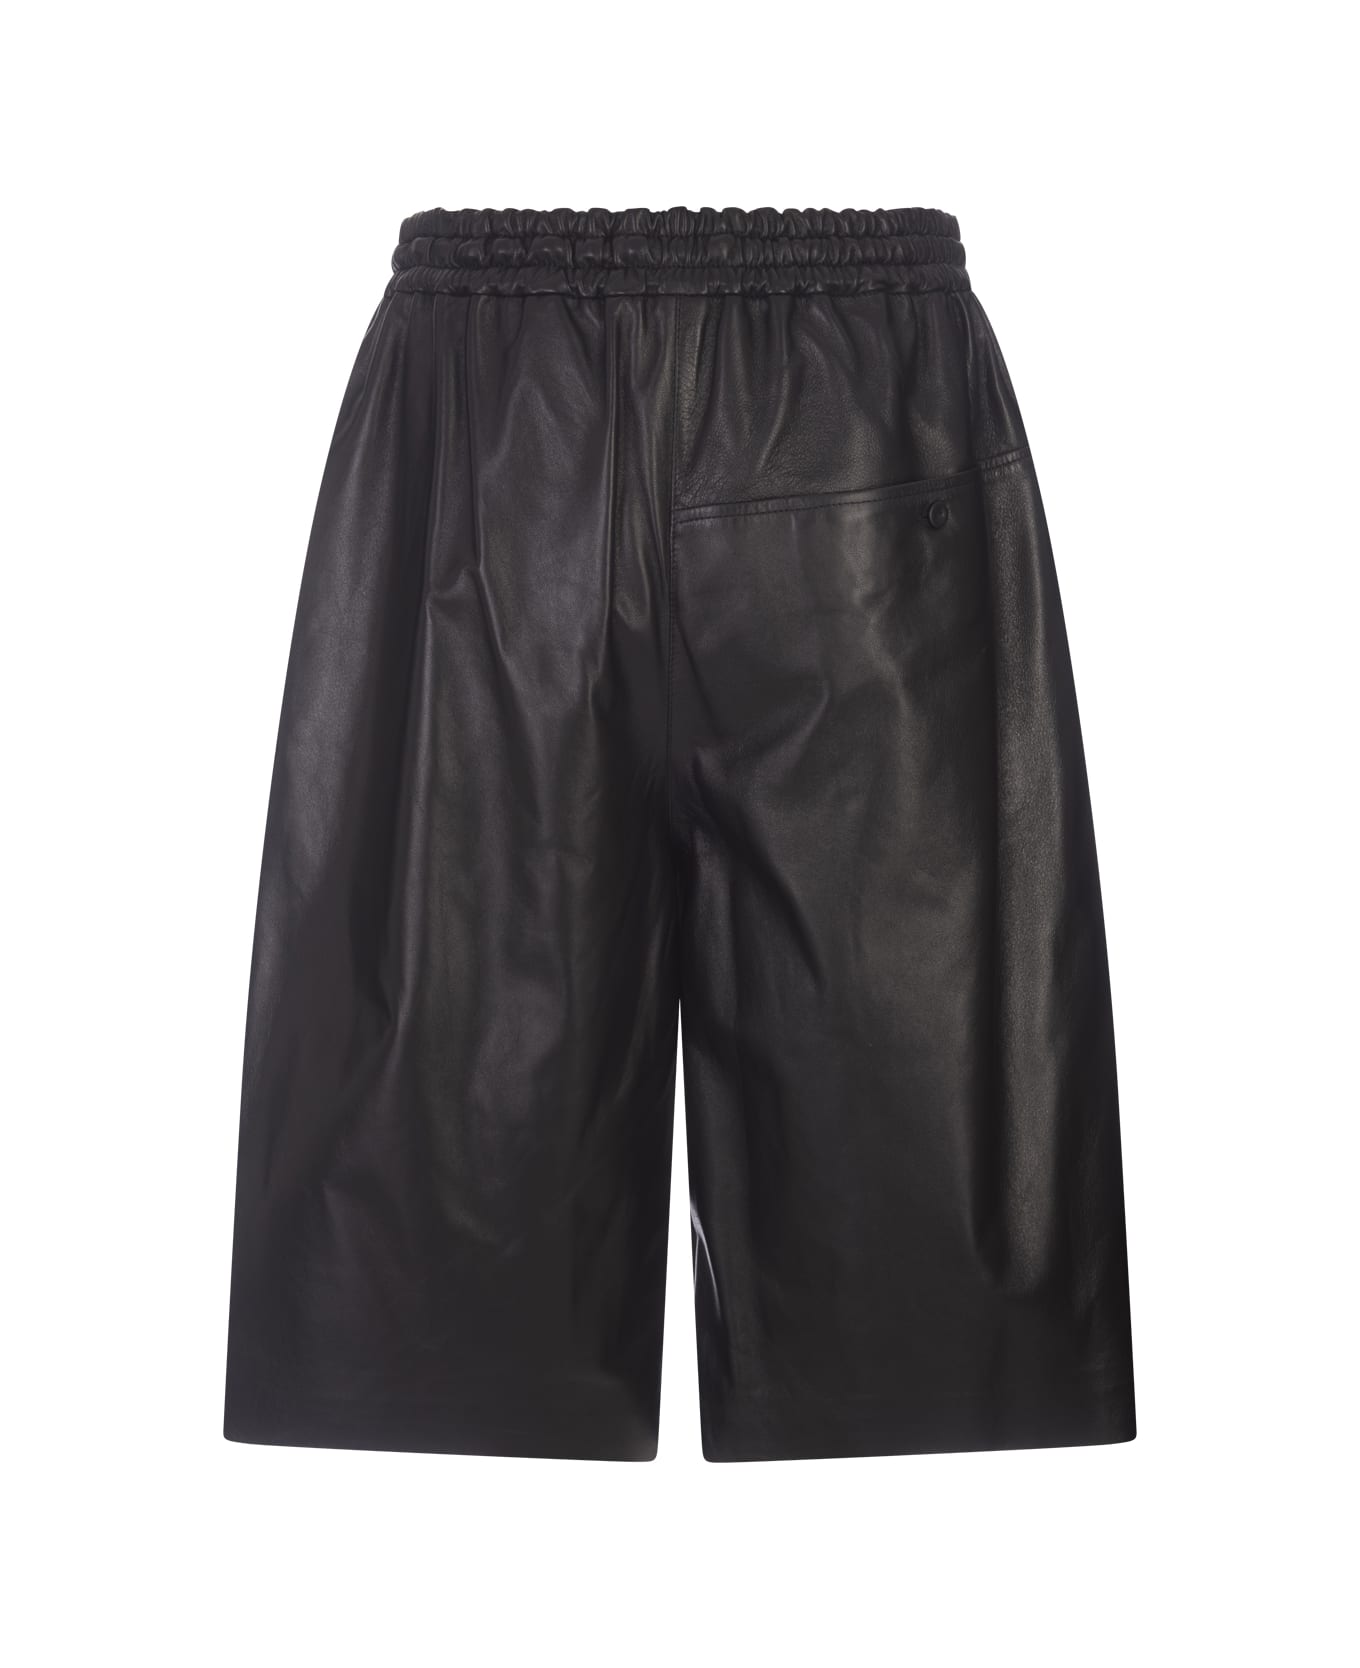 Jil Sander Black Leather Shorts - Black